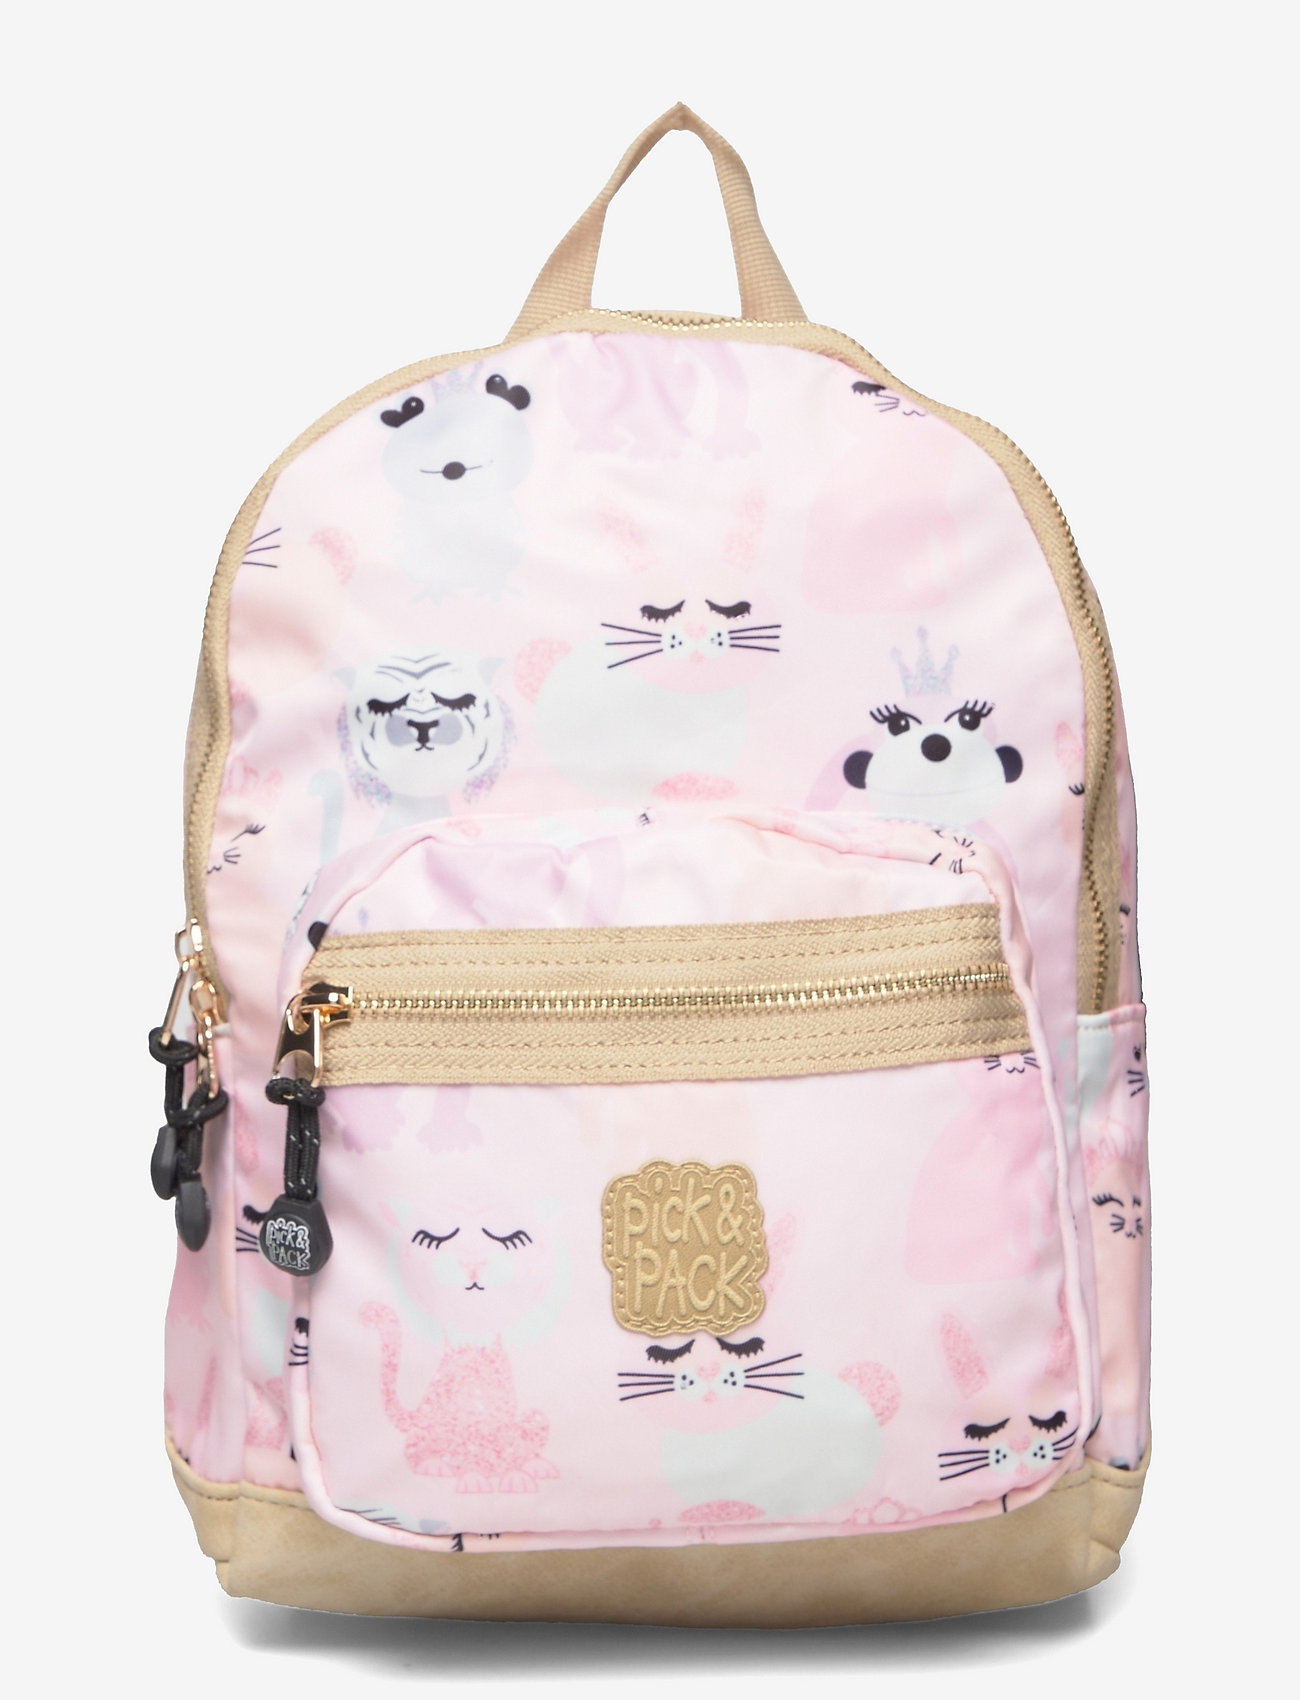 Pick & Pack Sweet Animal Backpack - Backpacks 